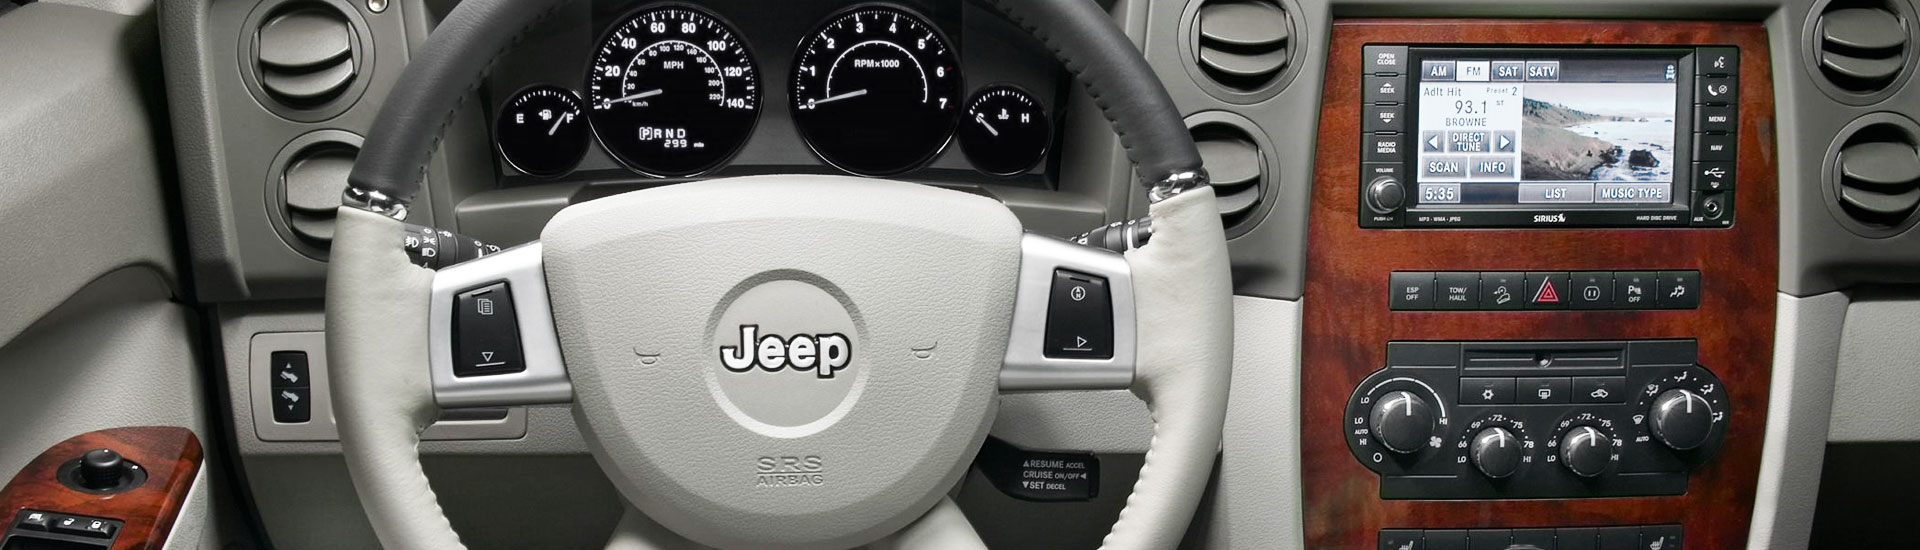 2022 Jeep Cherokee Custom Dash Kits